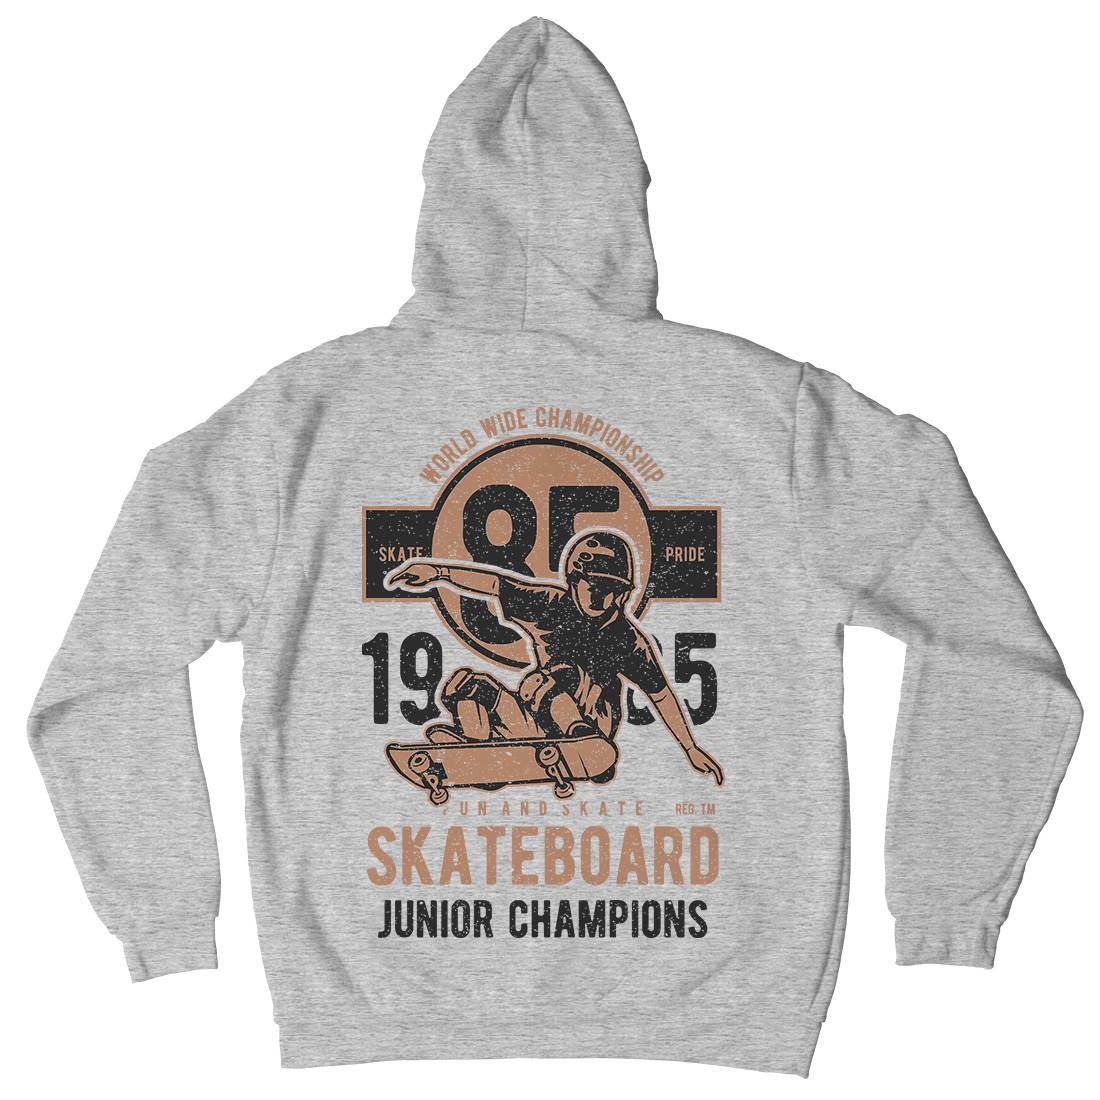 Skateboard Junior Champions Mens Hoodie With Pocket Skate A755